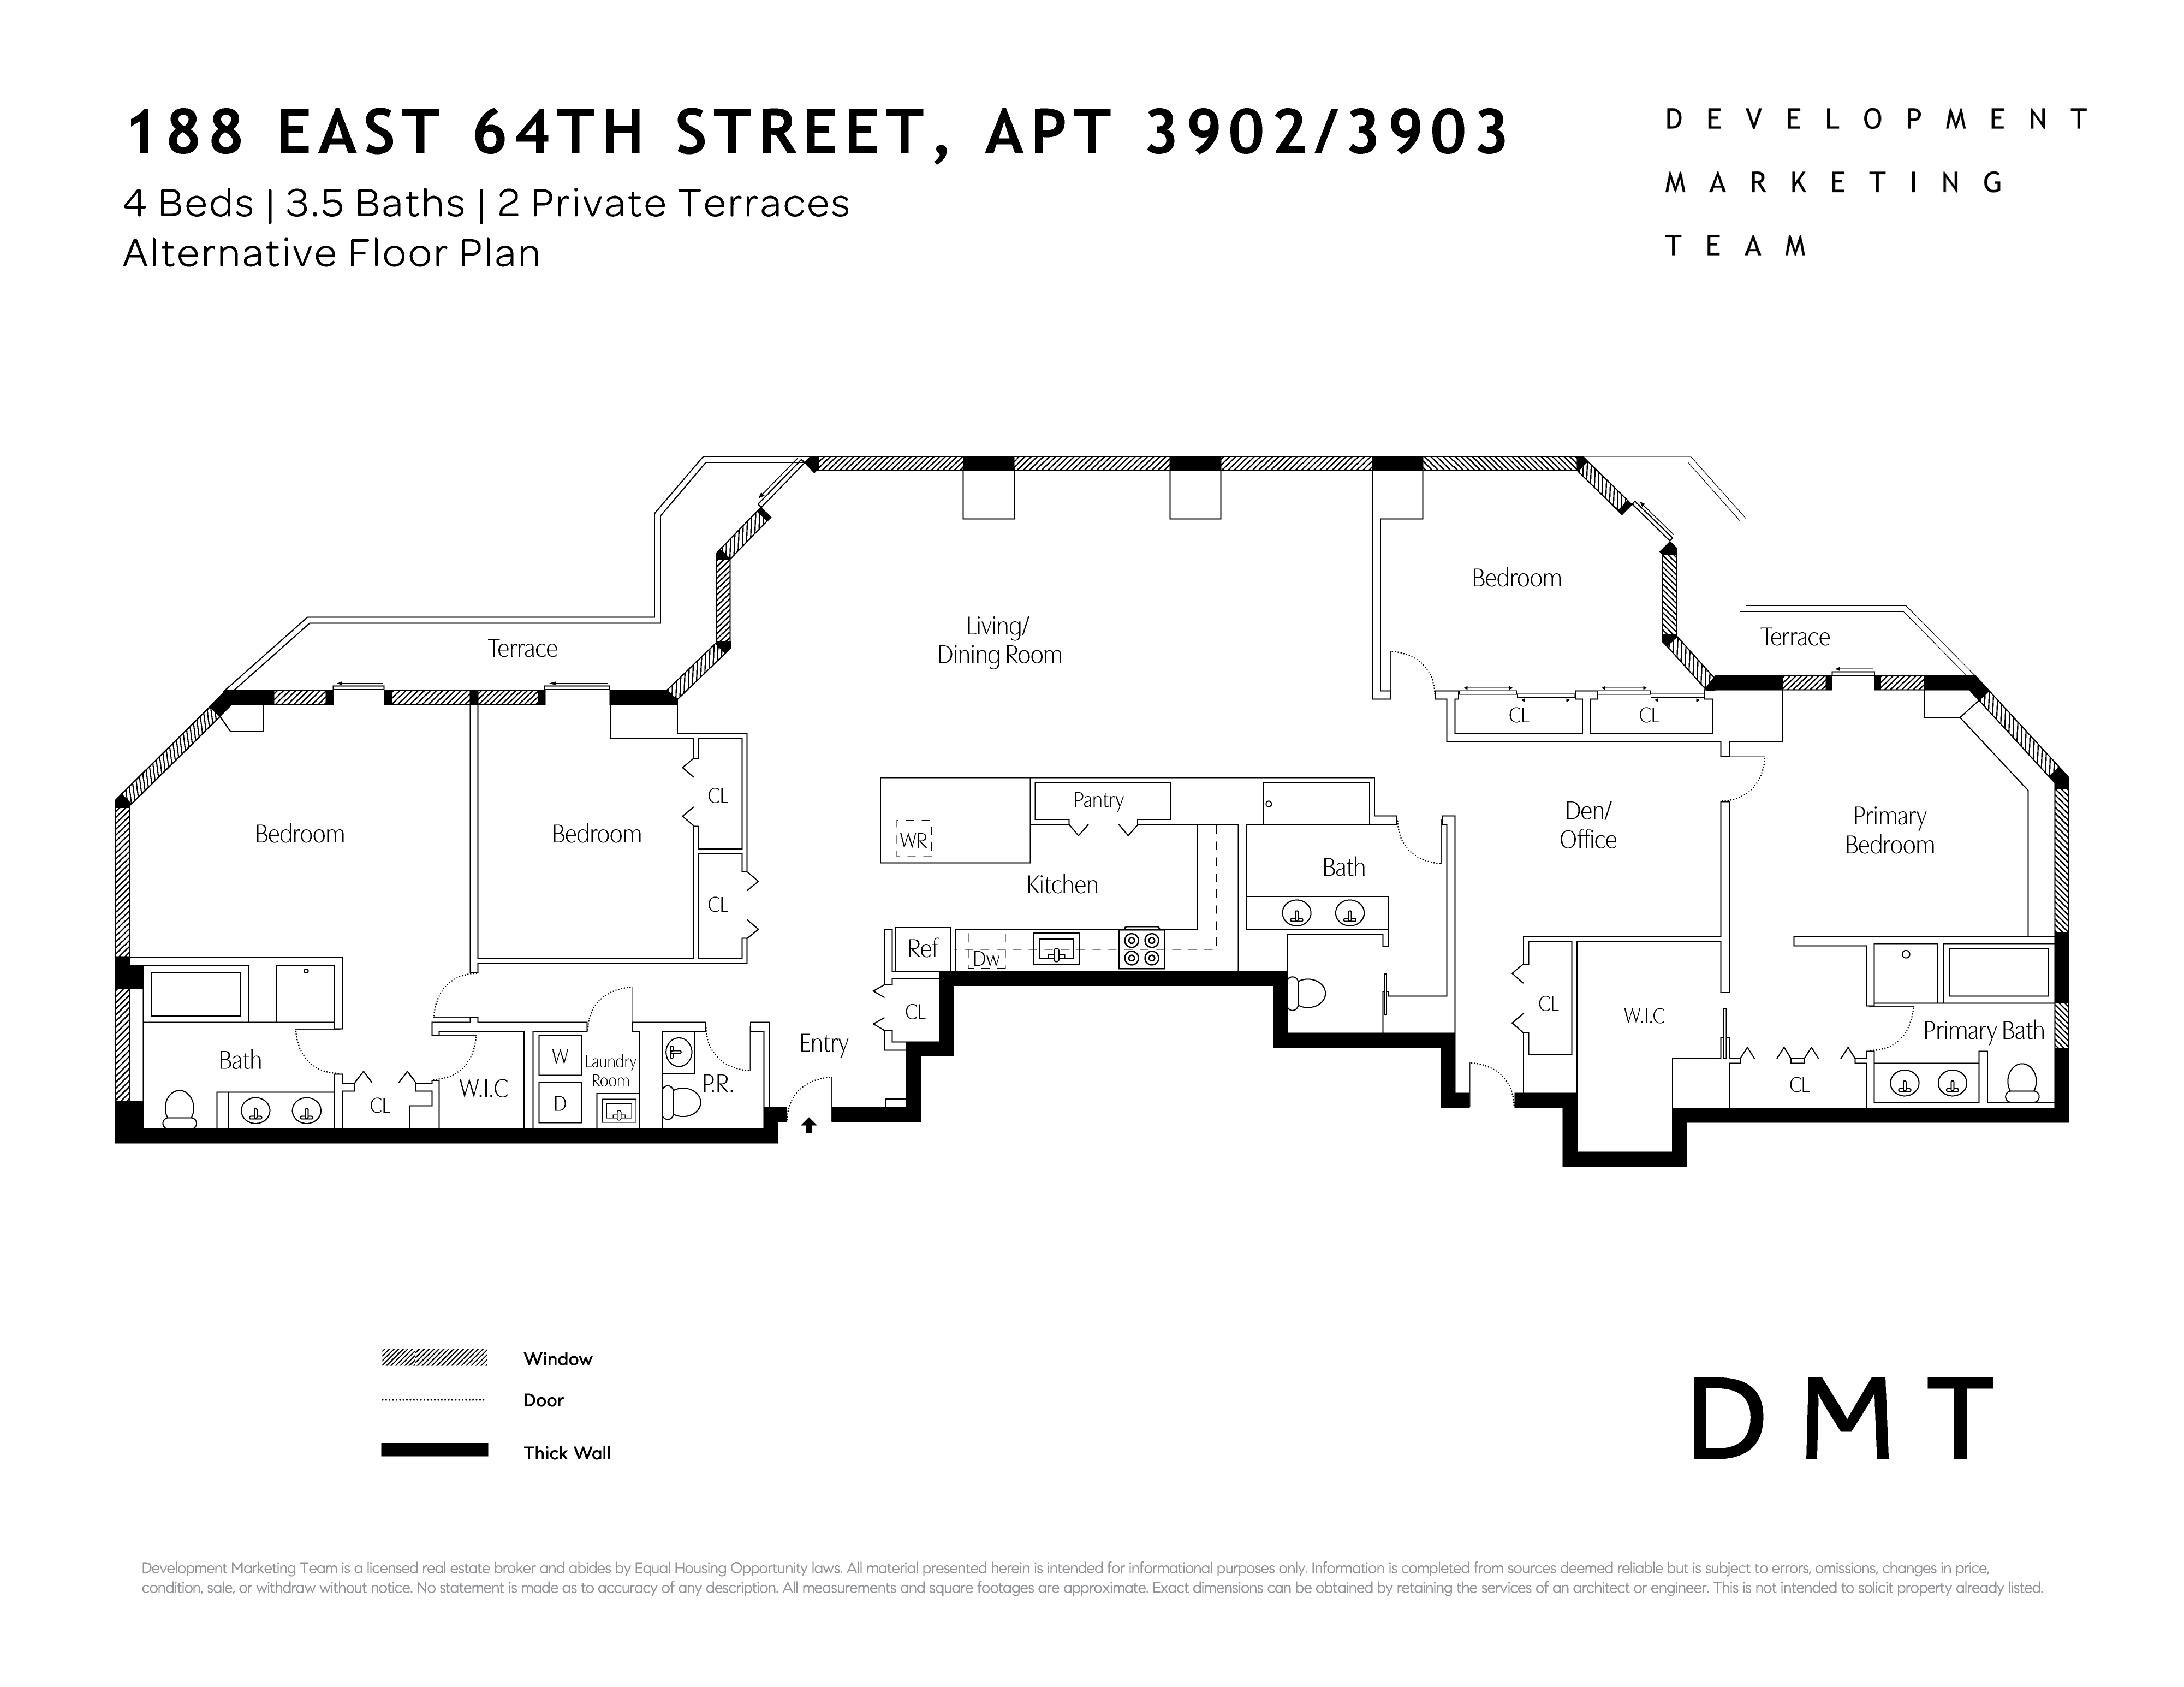 Floorplan for 188 East 64th Street, 3902/3903